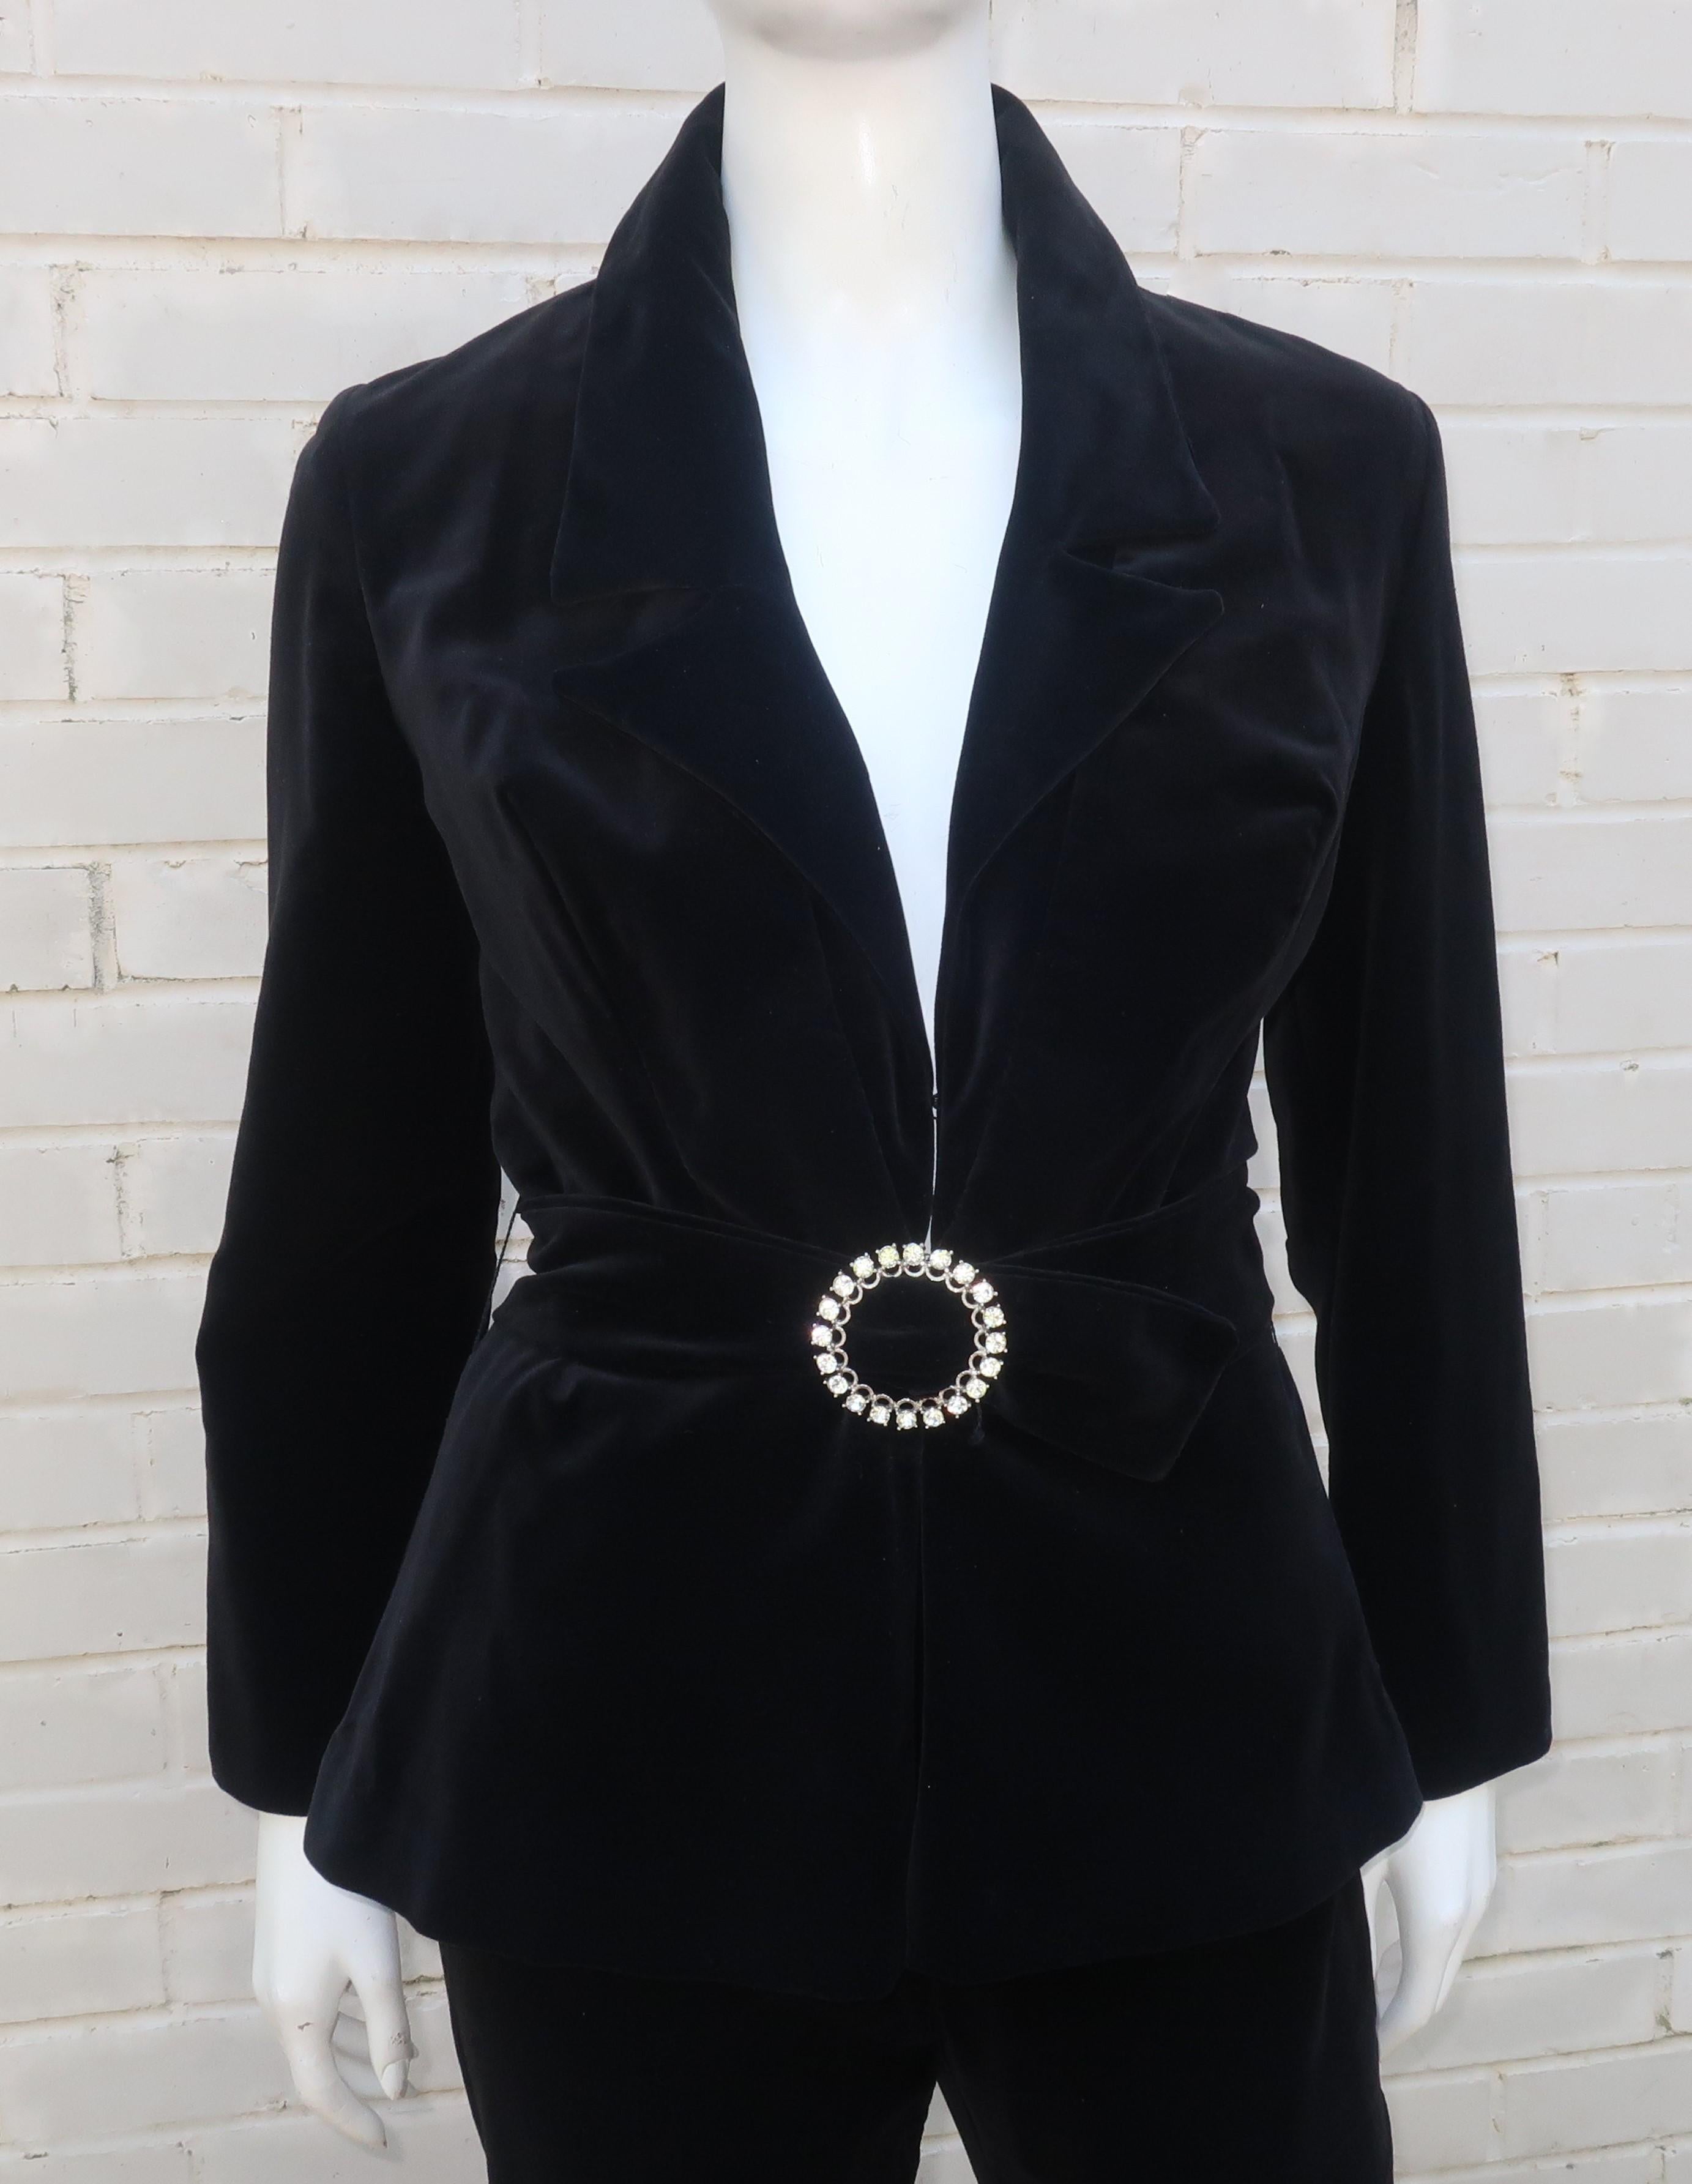 Black Velvet Pant Suit With Rhinestone Belt, C.1970 In Good Condition For Sale In Atlanta, GA